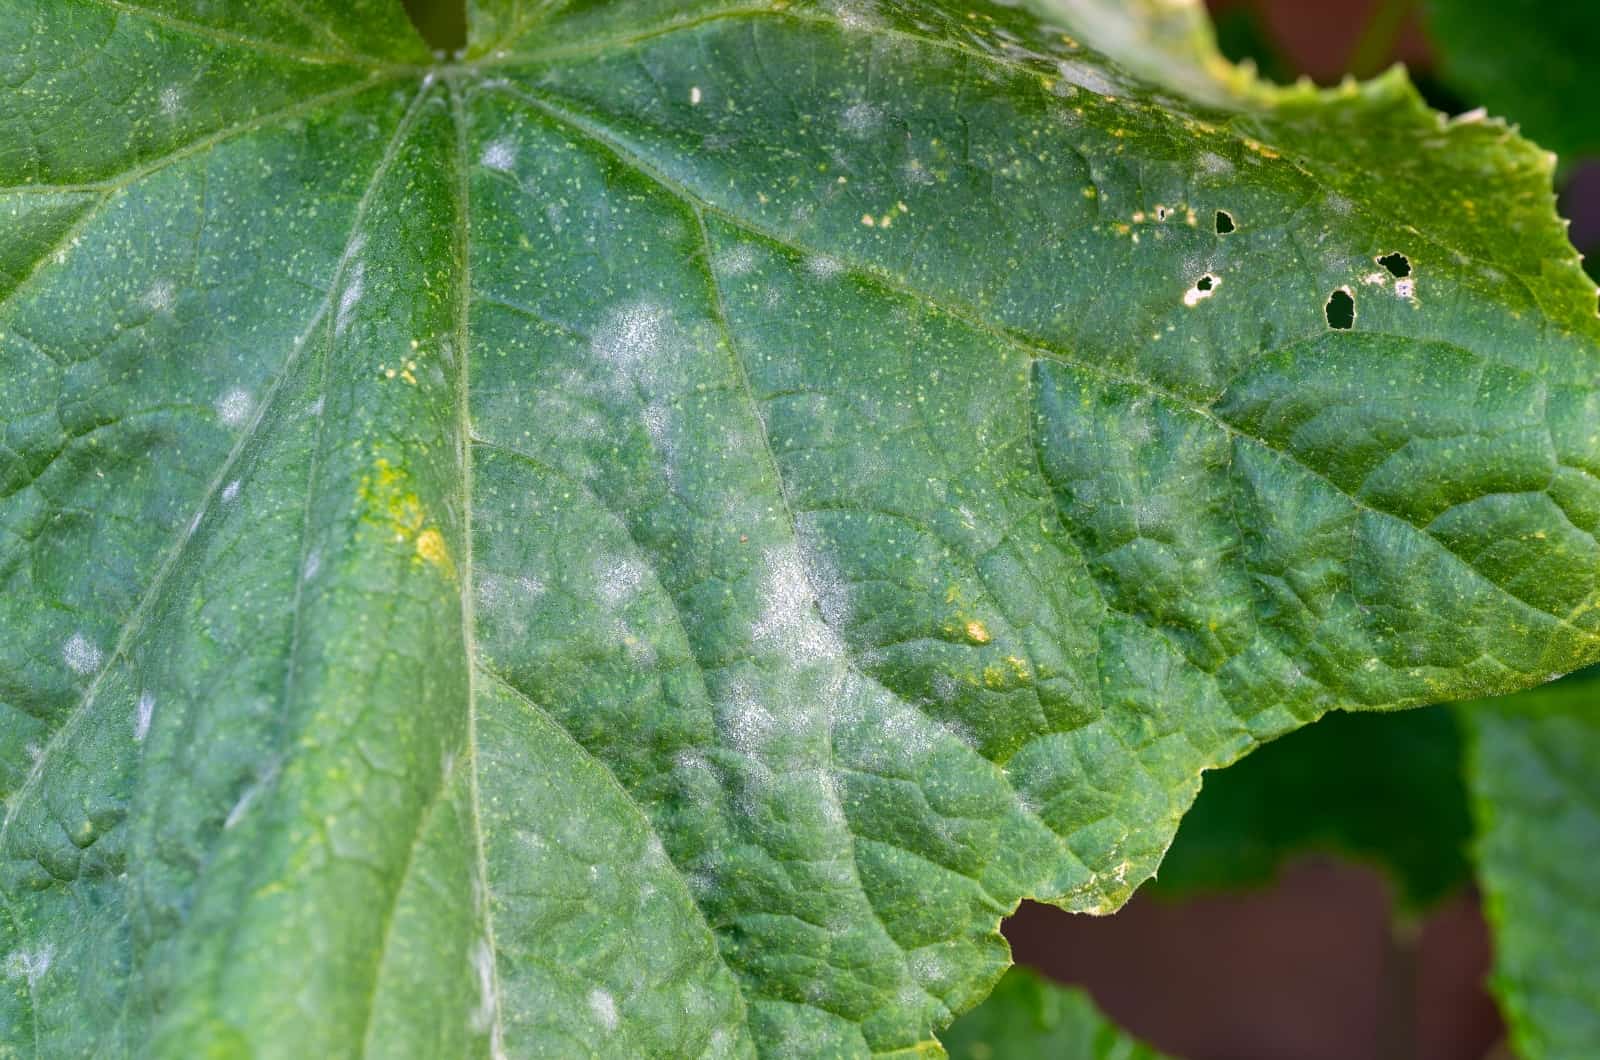 little White Spots On Cucumber leaf